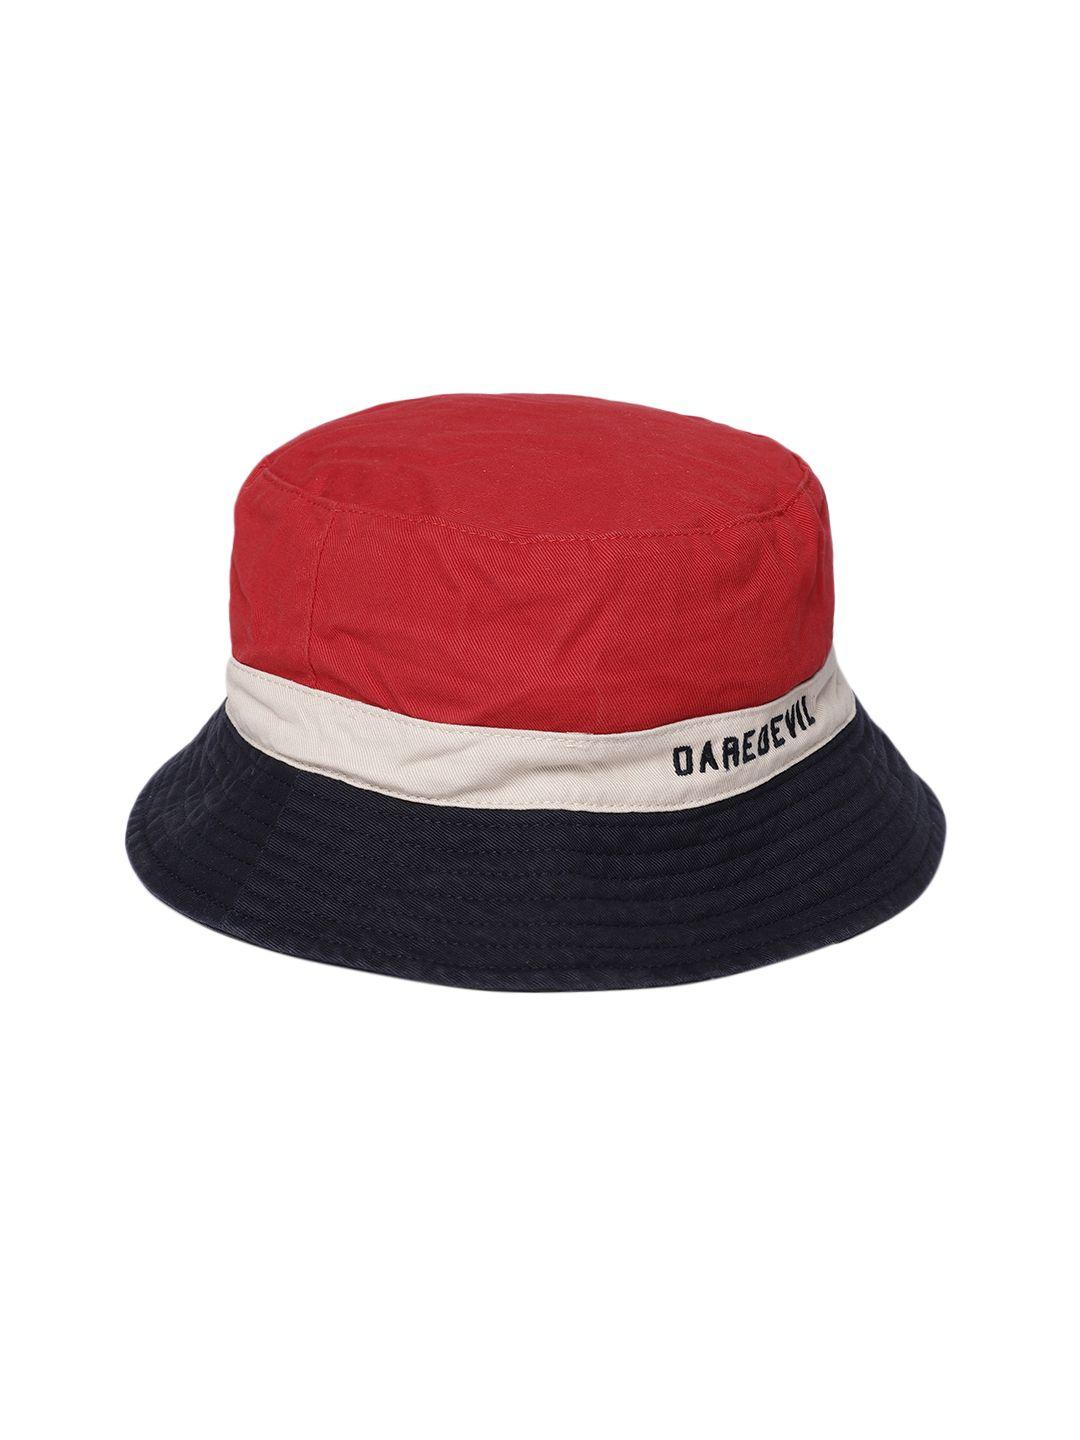 flying machine men red & navy blue colourblocked bucket hat